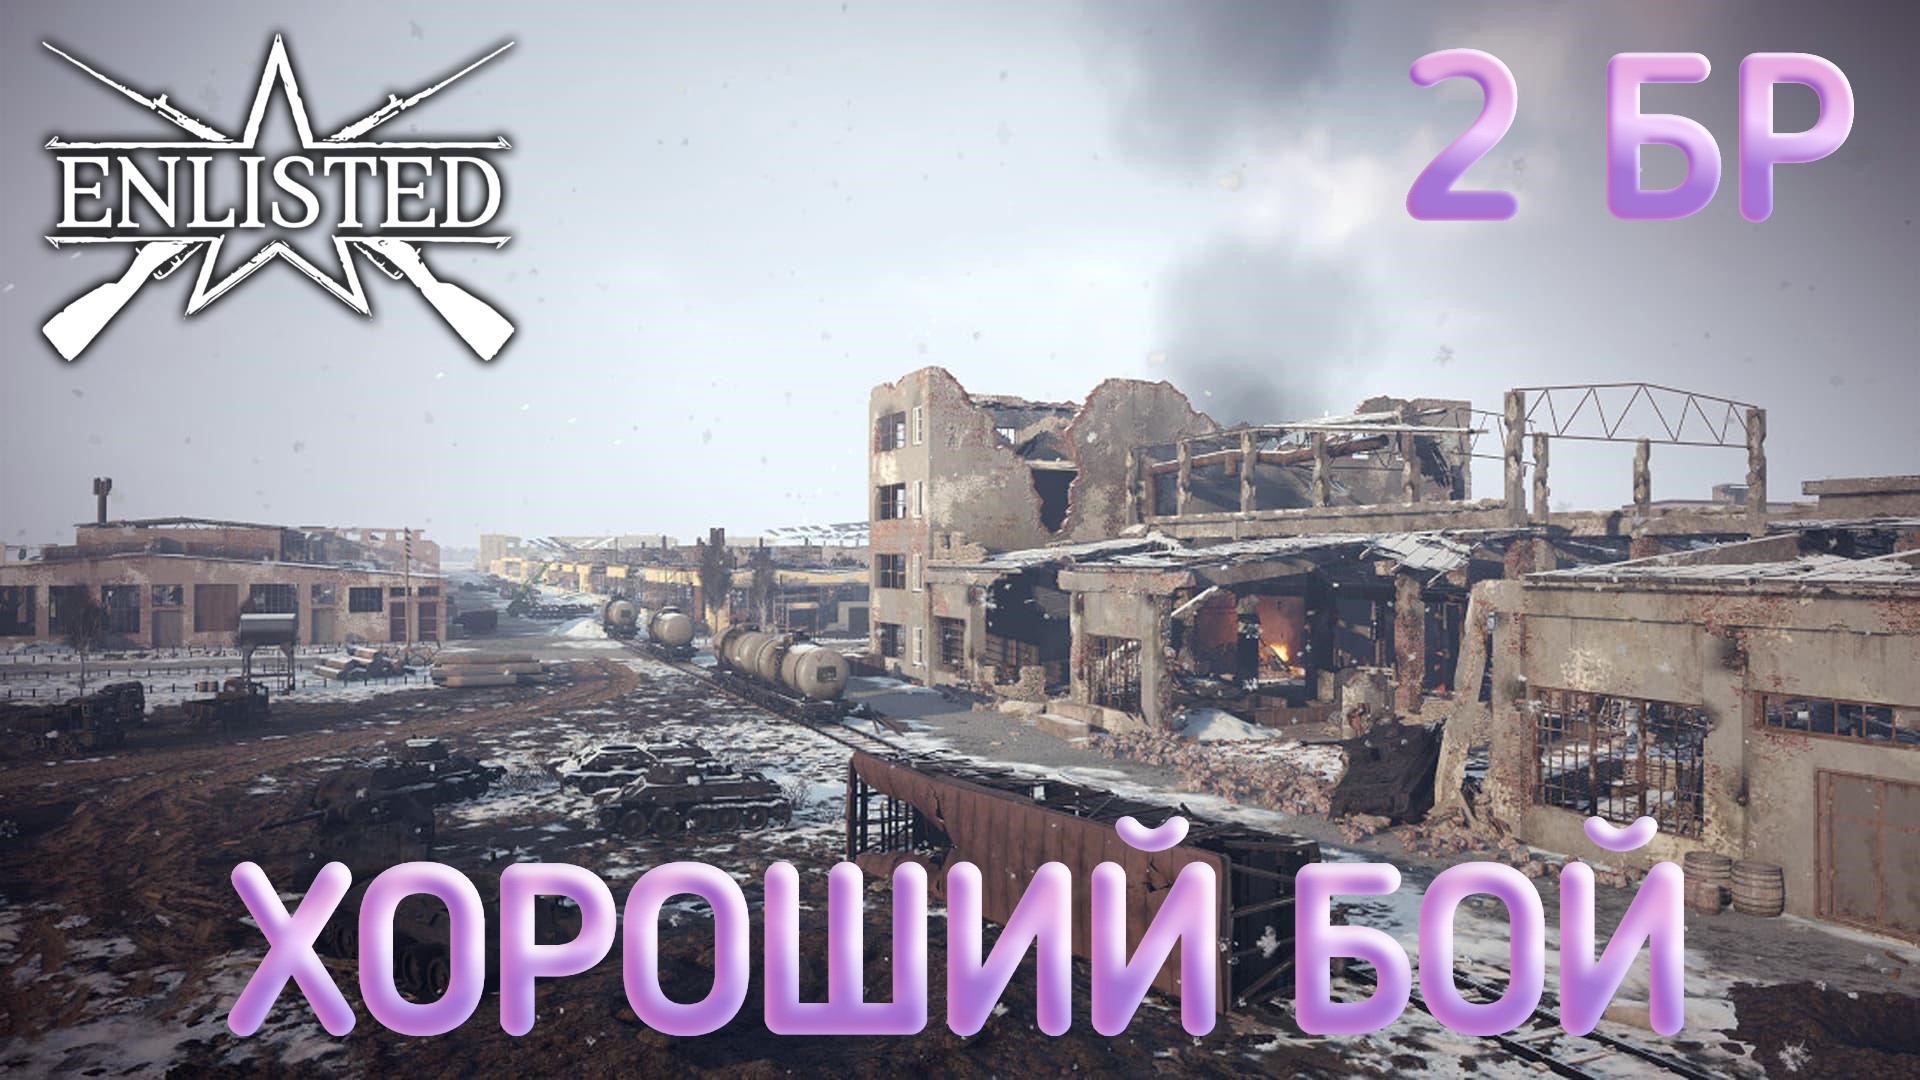 Enlisted - 2 БР Тракторный завод Запад (Уничтожение) Битва за Сталинград (Без комментариев)